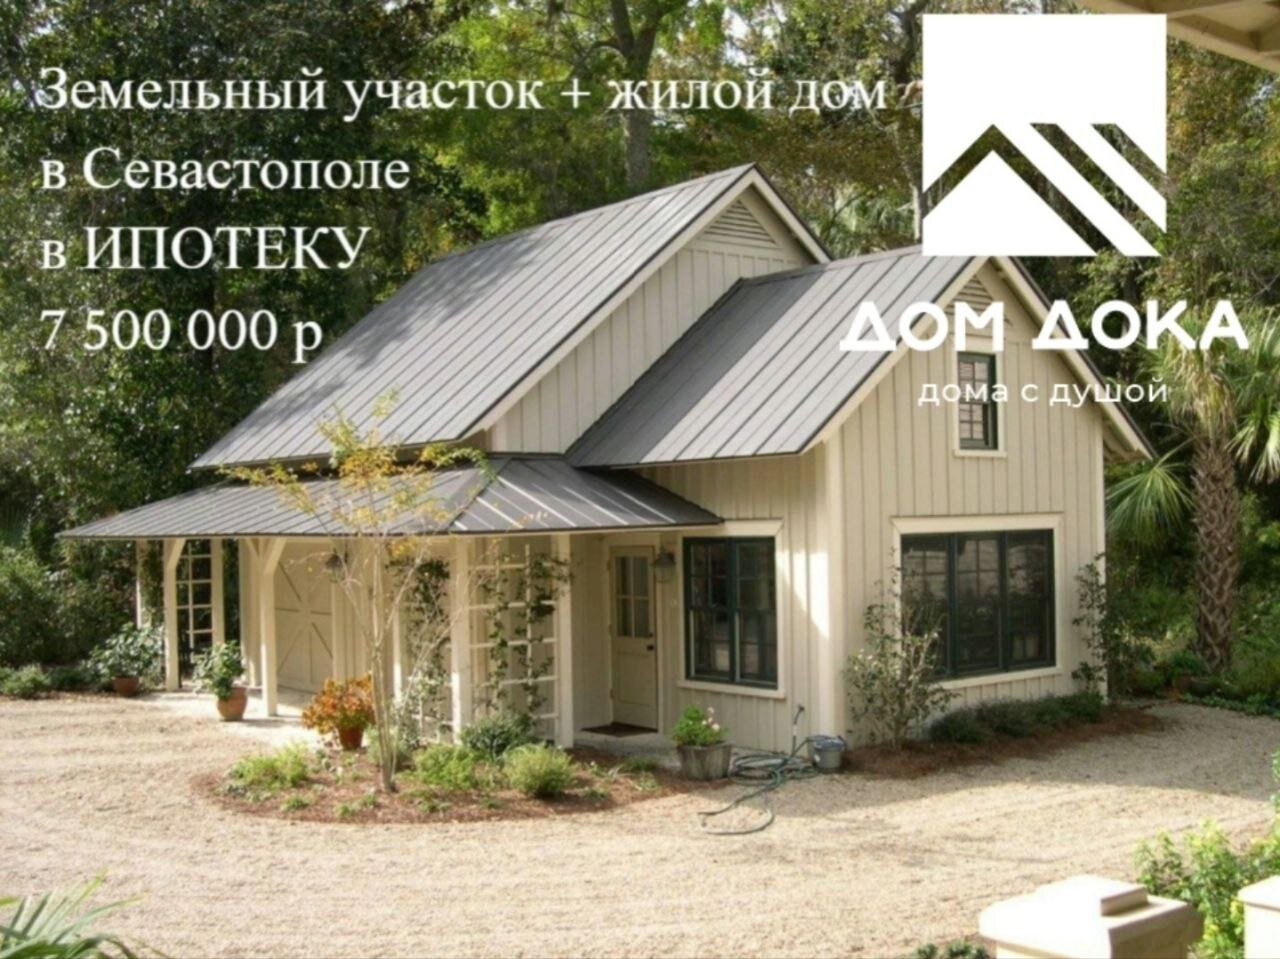 Строительство загородного дома в Севастополе и Республике Крым в ипотеку - фото pic_9549fb390426649da4a8888e5e7b6fe3_1920x9000_1.jpg